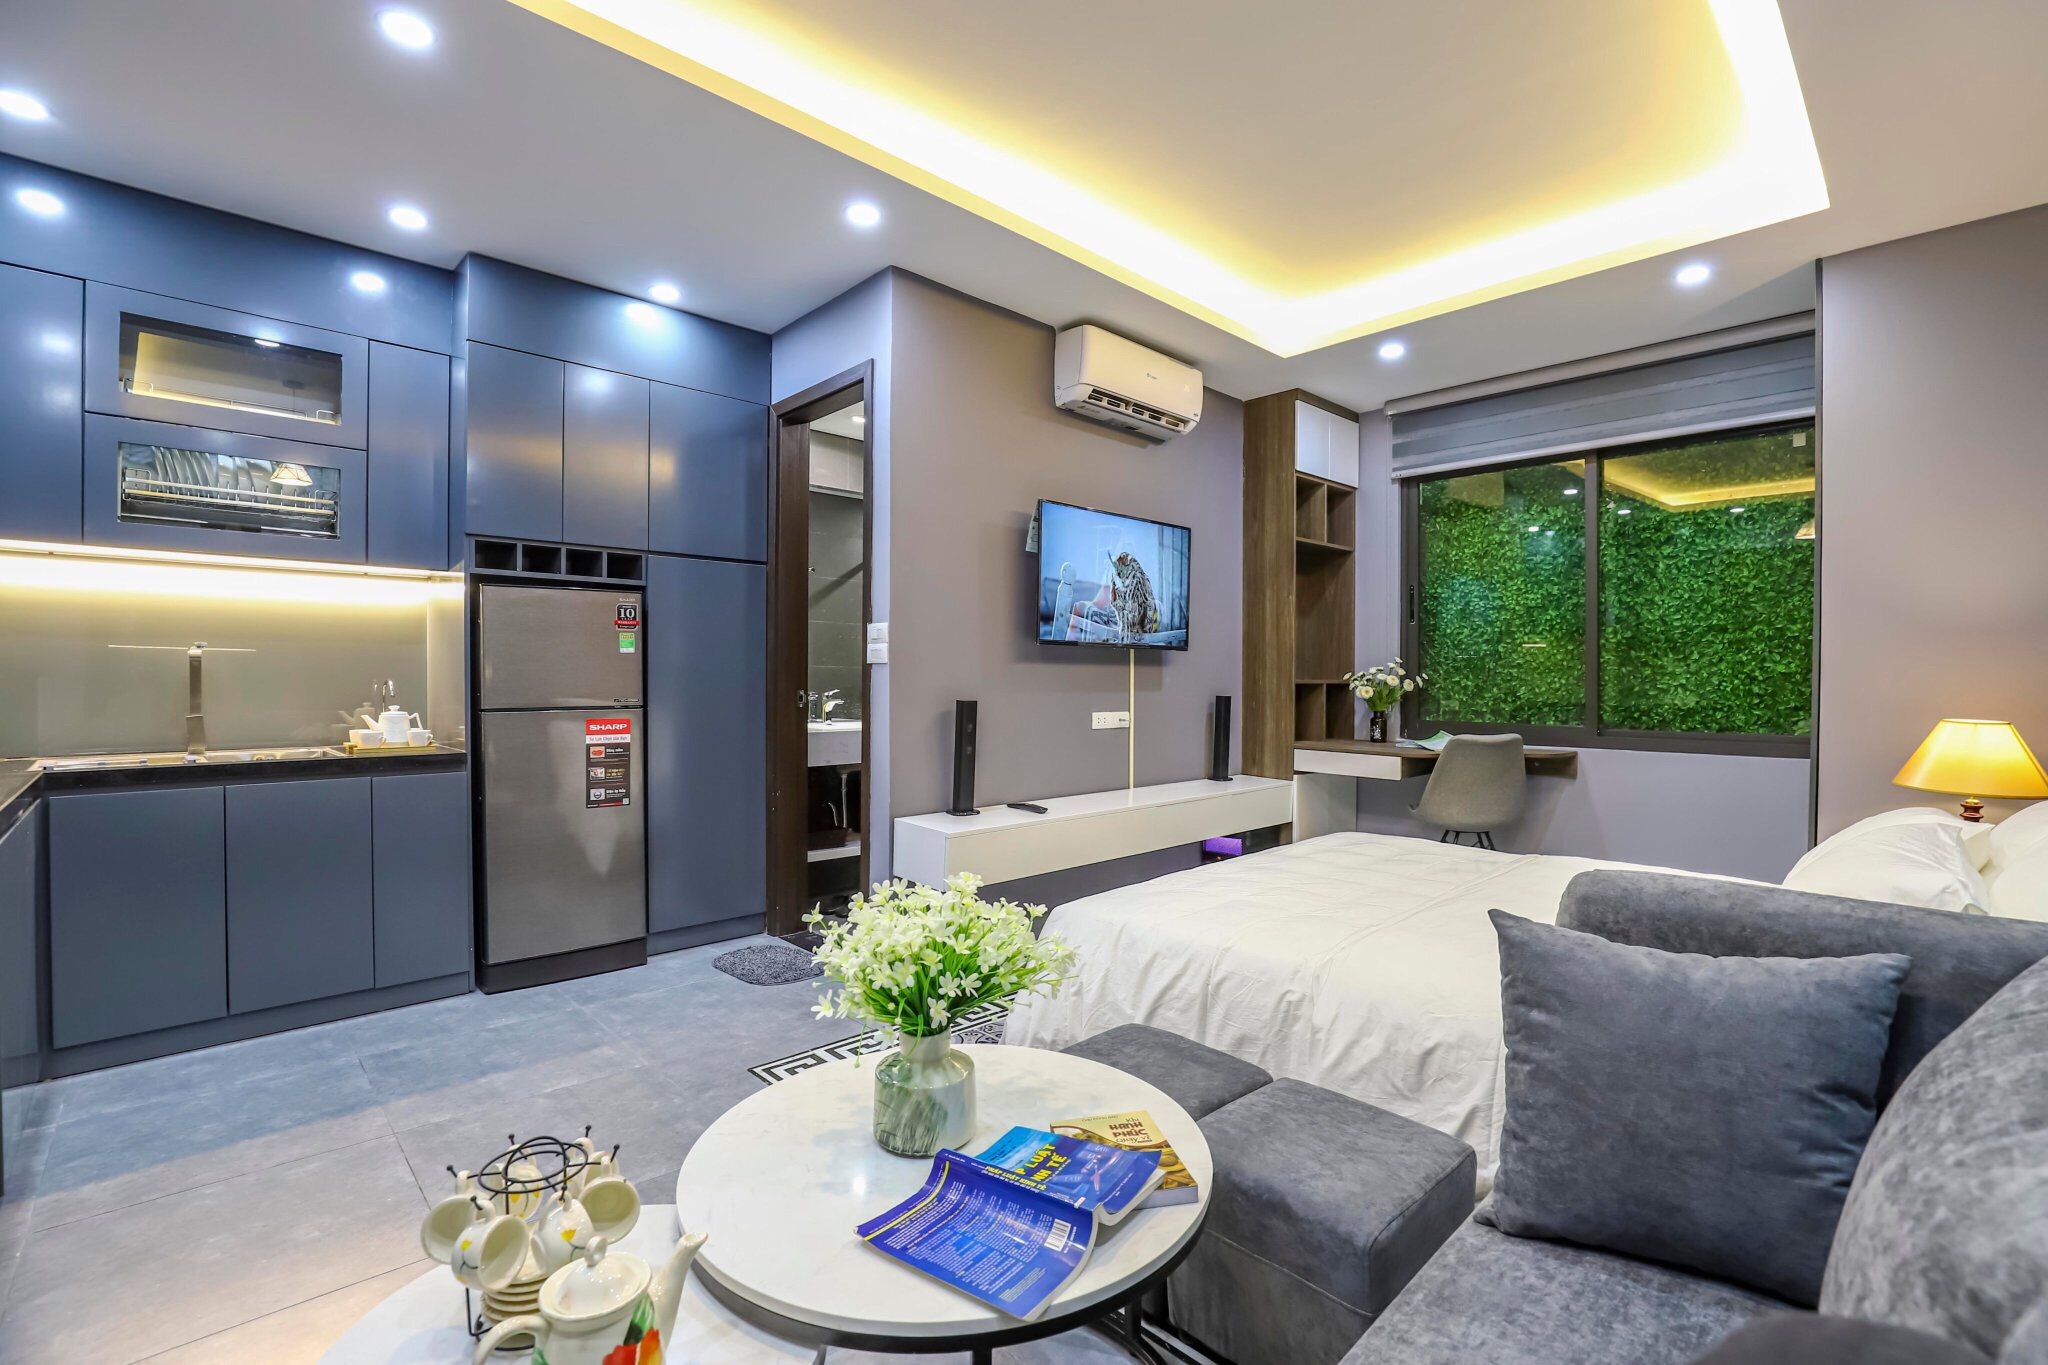 *Serviced apartment in Hoan Kiem, Center of Hanoi*